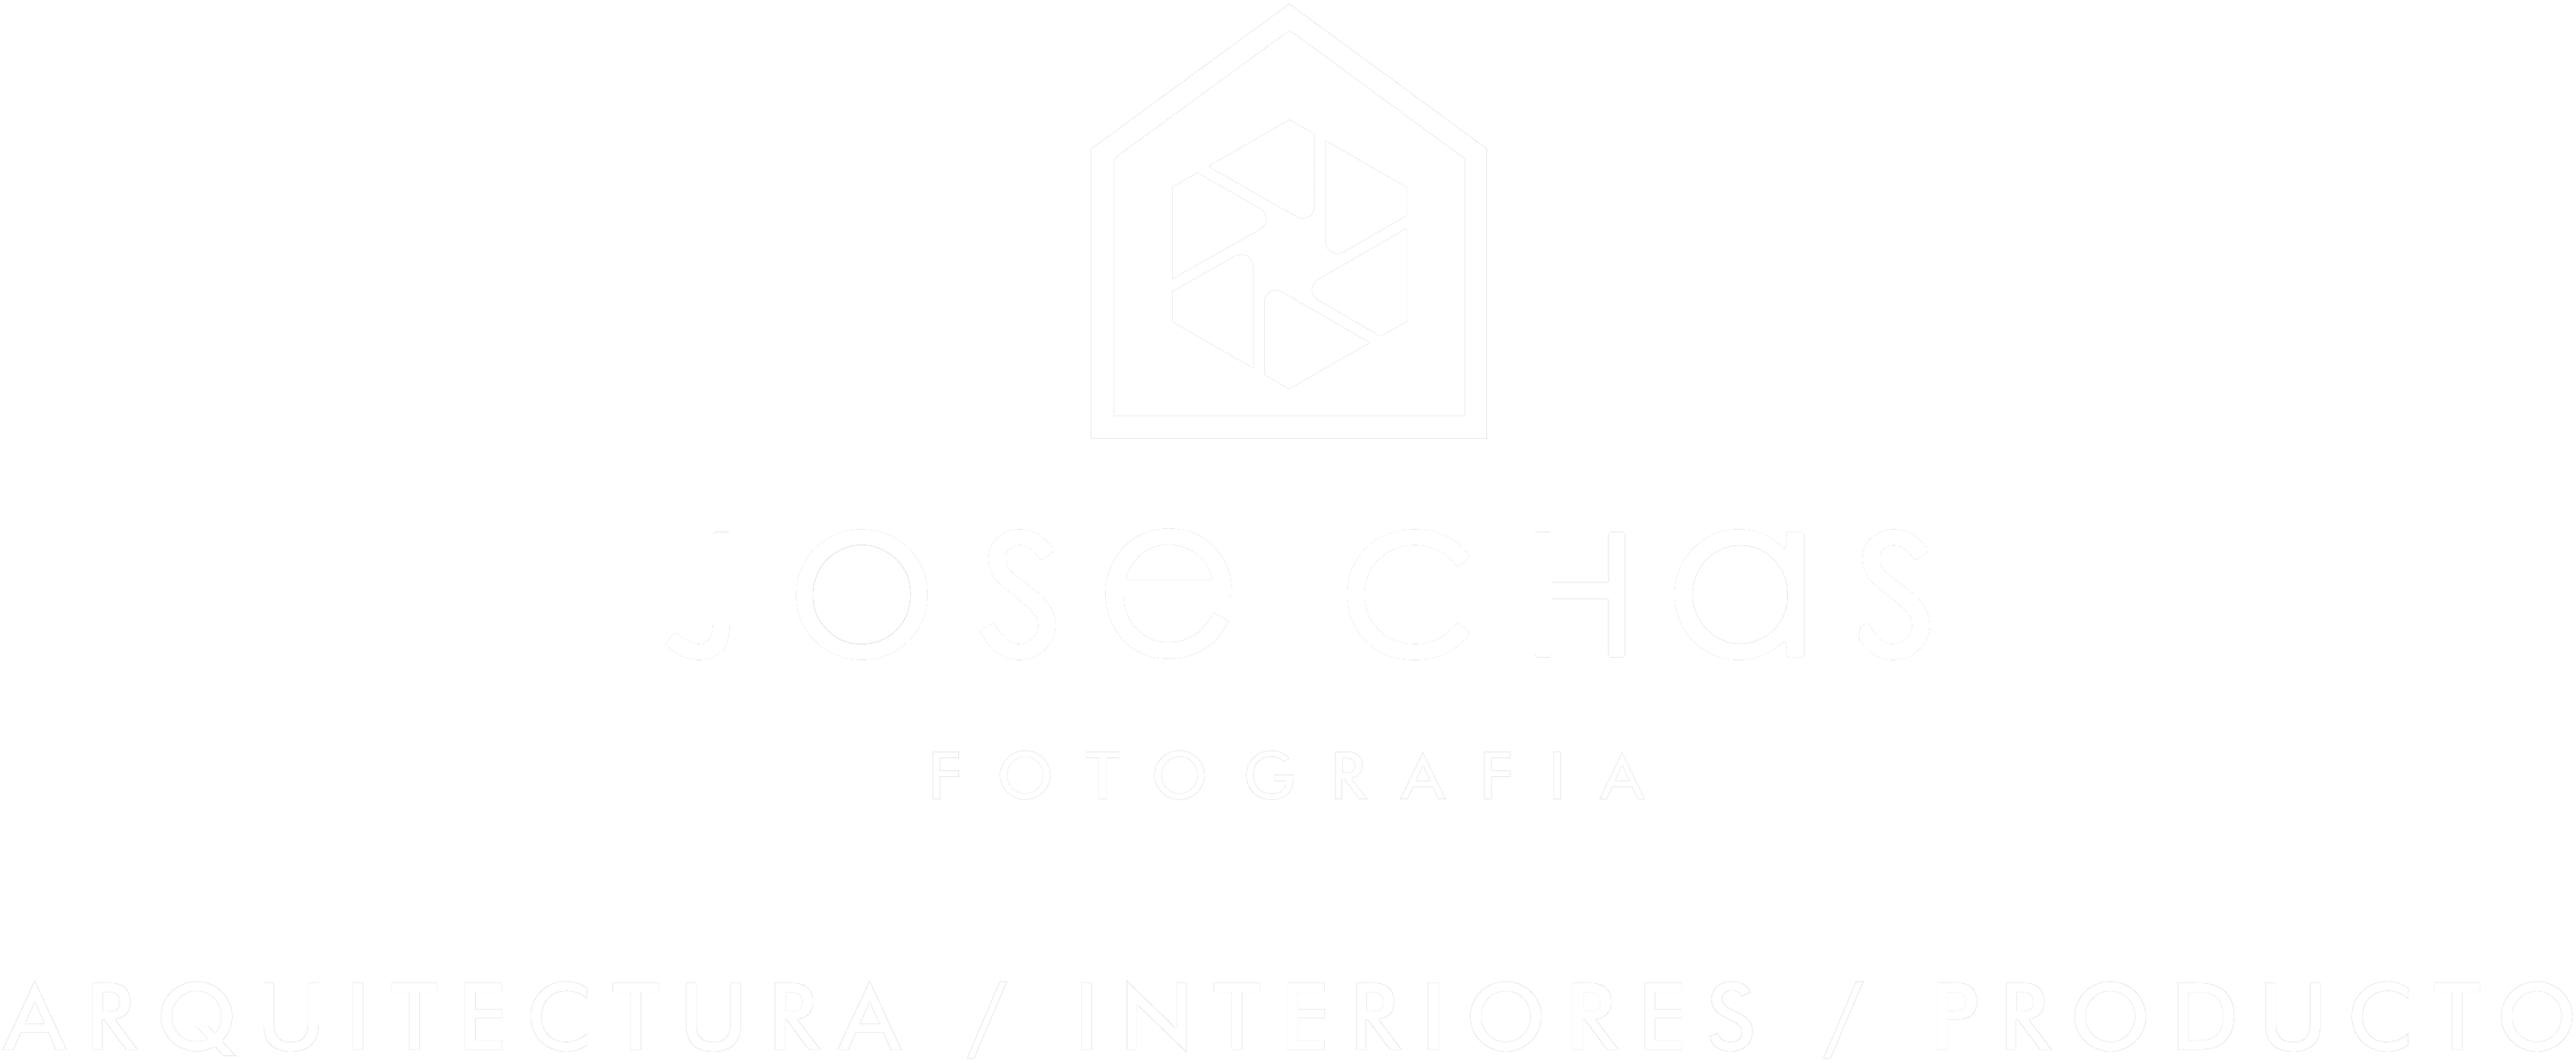 Jose Chas - Fotografia